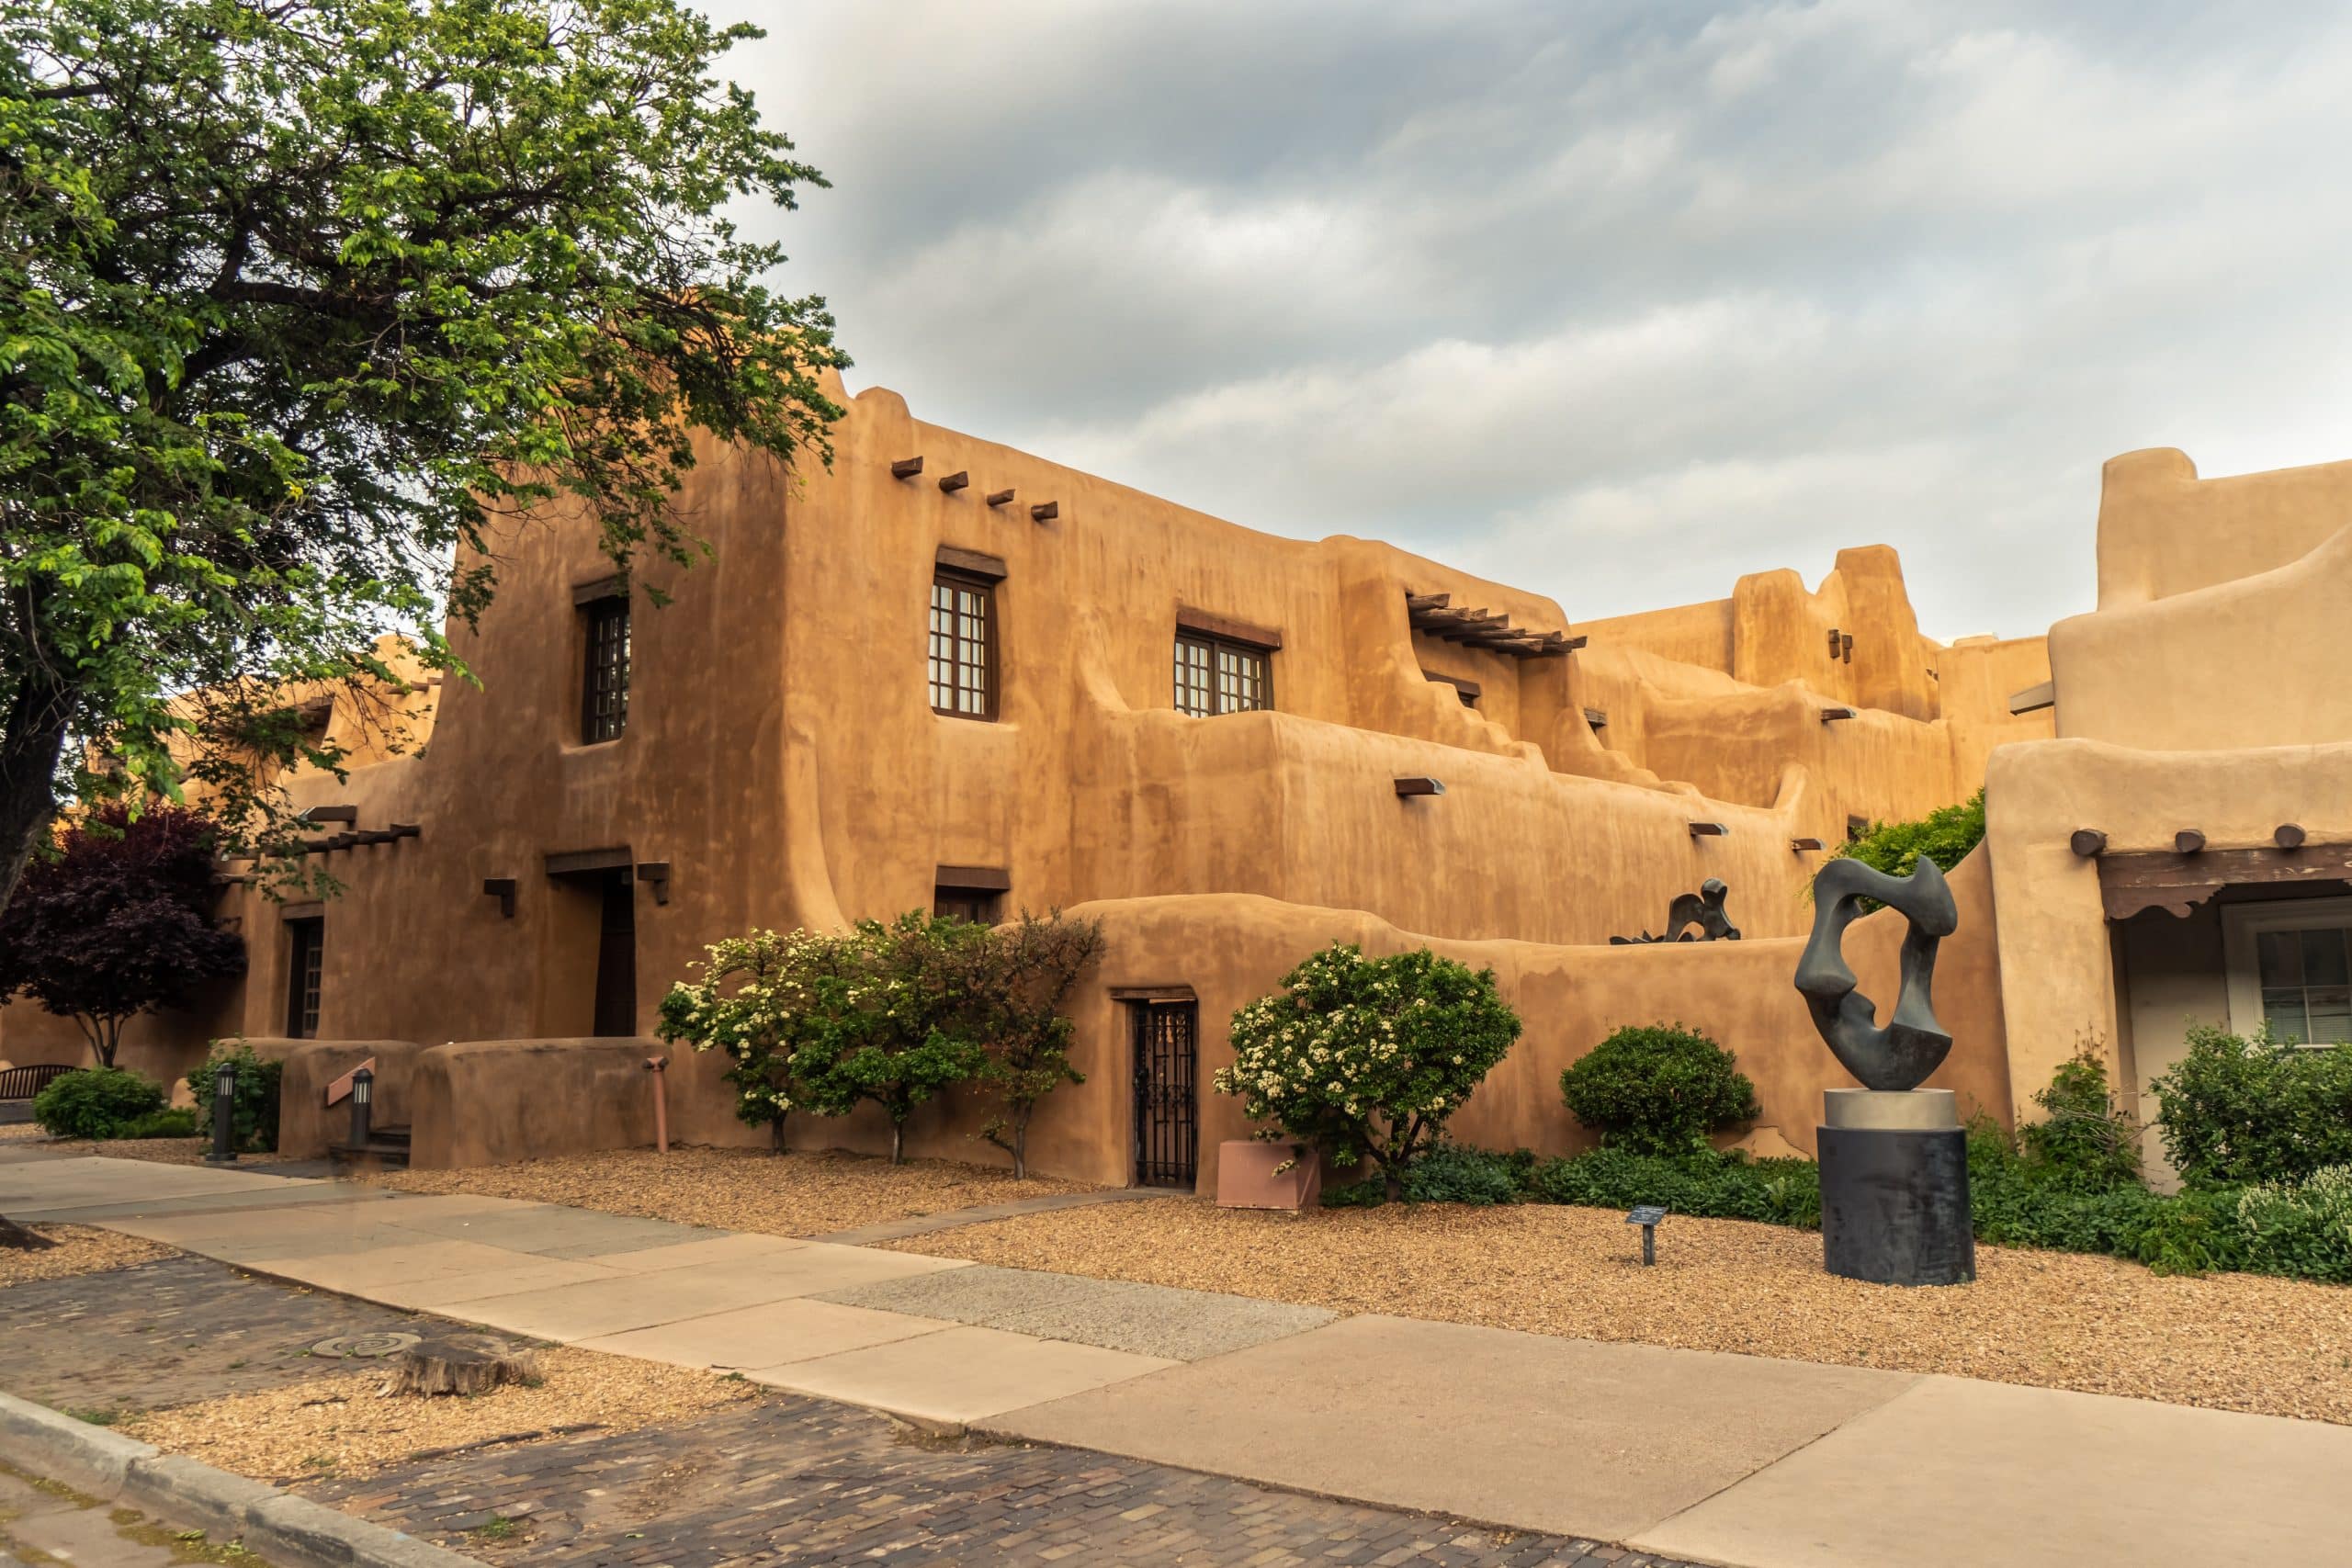 New Mexico Museum of Art in Santa Fe, NM